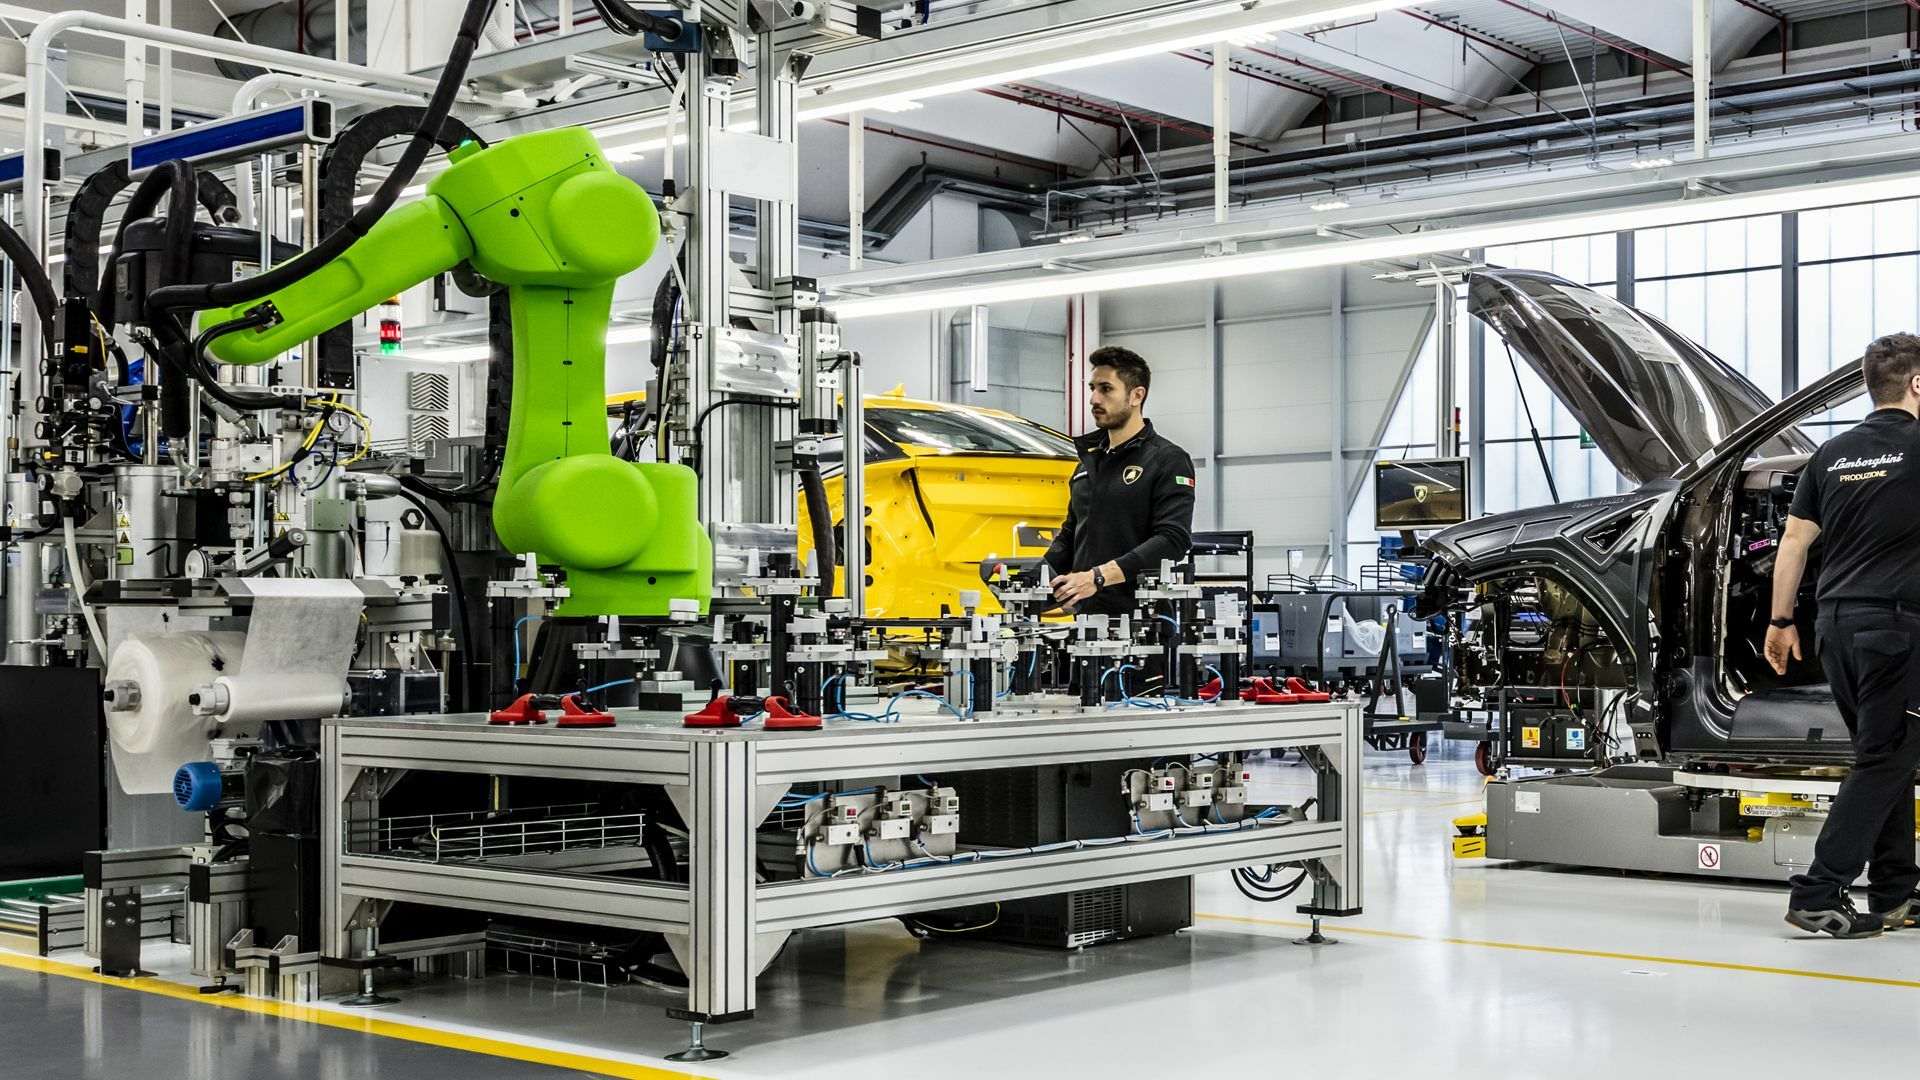 Fábrica de Lamborghini Urus - Línea de montaje - Proceso de producción (Super Cars Mega Factories)